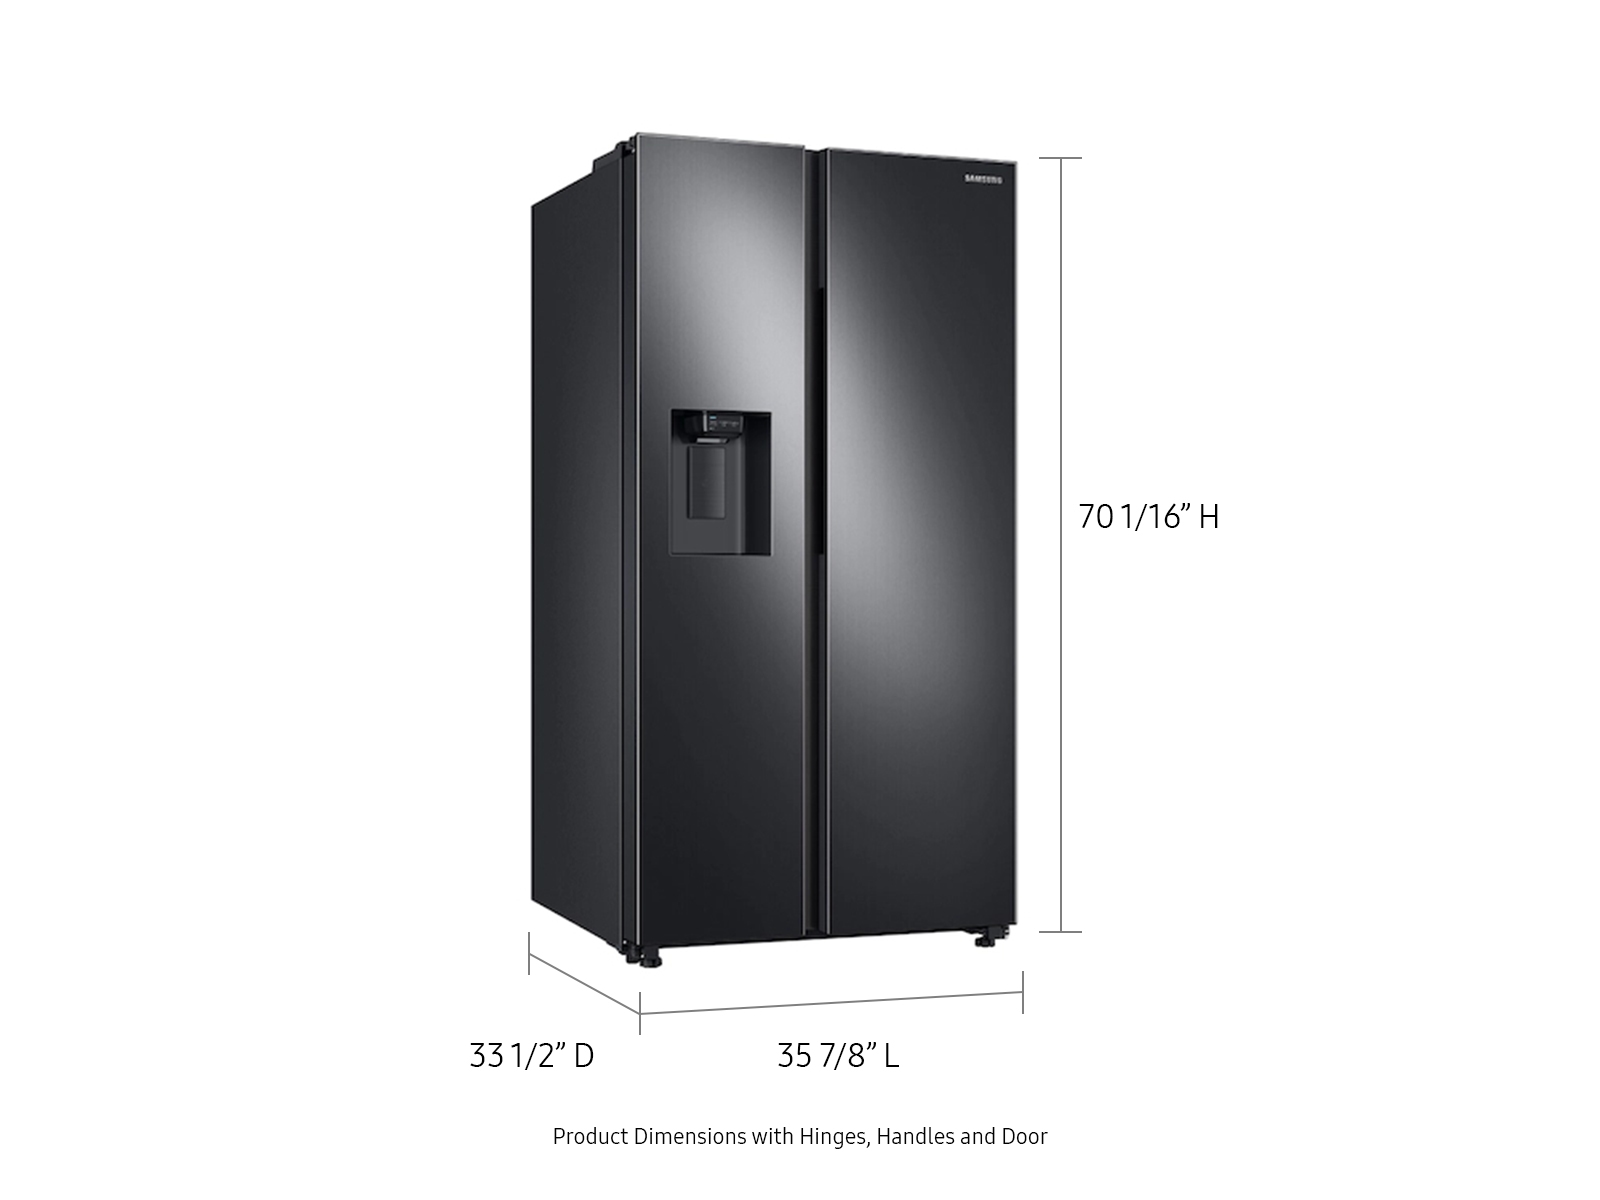 Best Side Shop Samsung Refrigerators our Side by US |